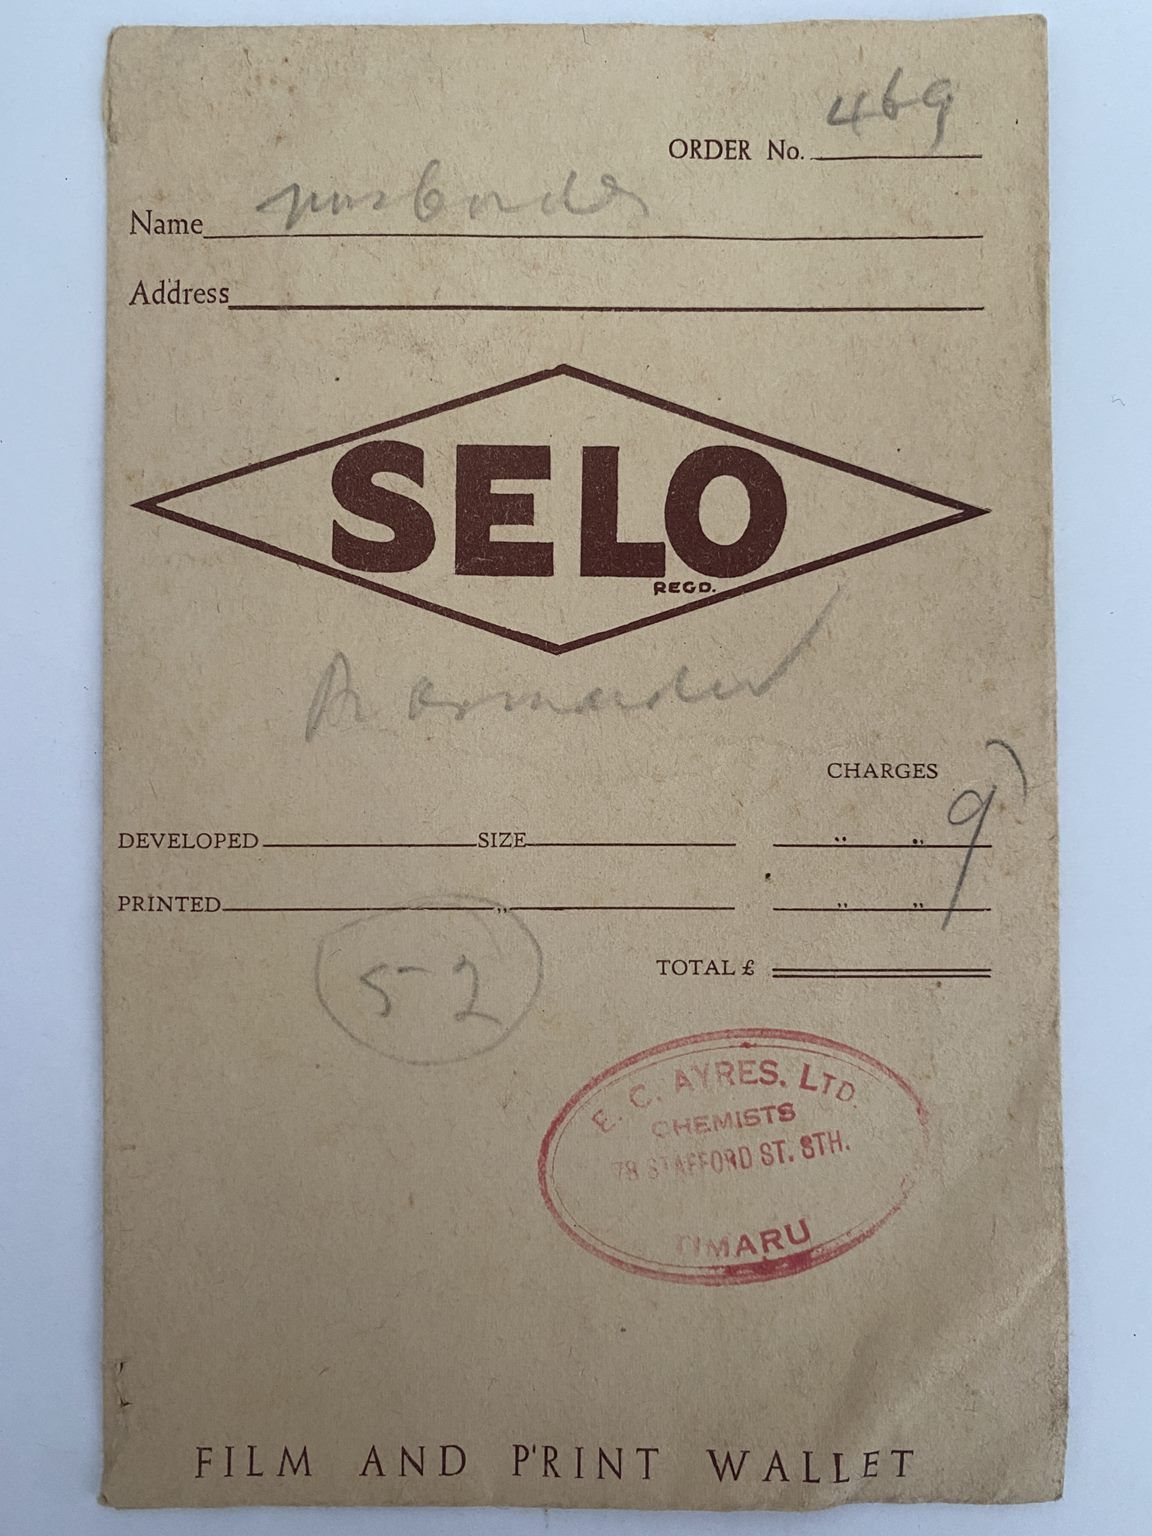 OLD PHOTO / NEGATIVE WALLET: Selo Film - E.C Ayres Ltd, Chemist, Timaru 1940s